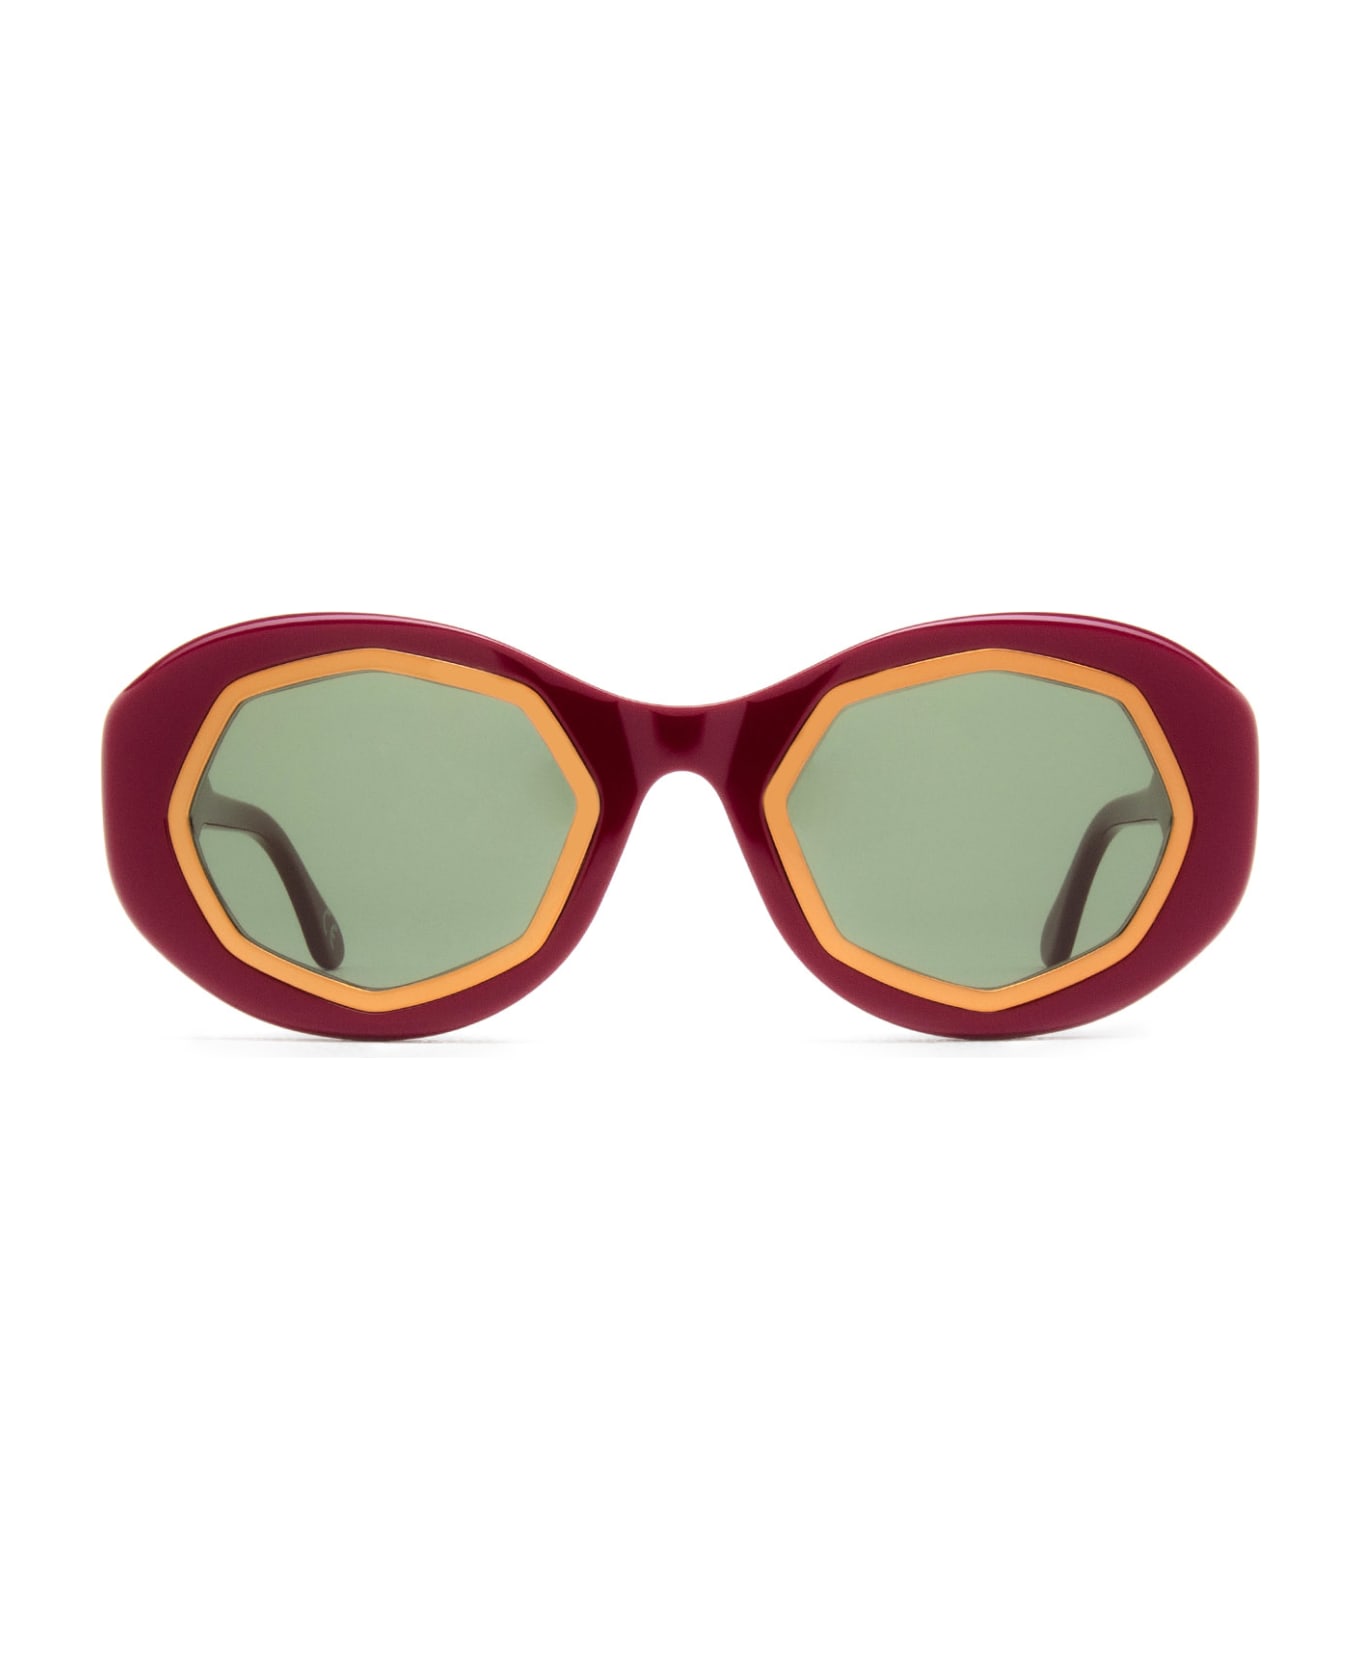 Marni Eyewear Mount Bromo Bordeaux Sunglasses - Bordeaux